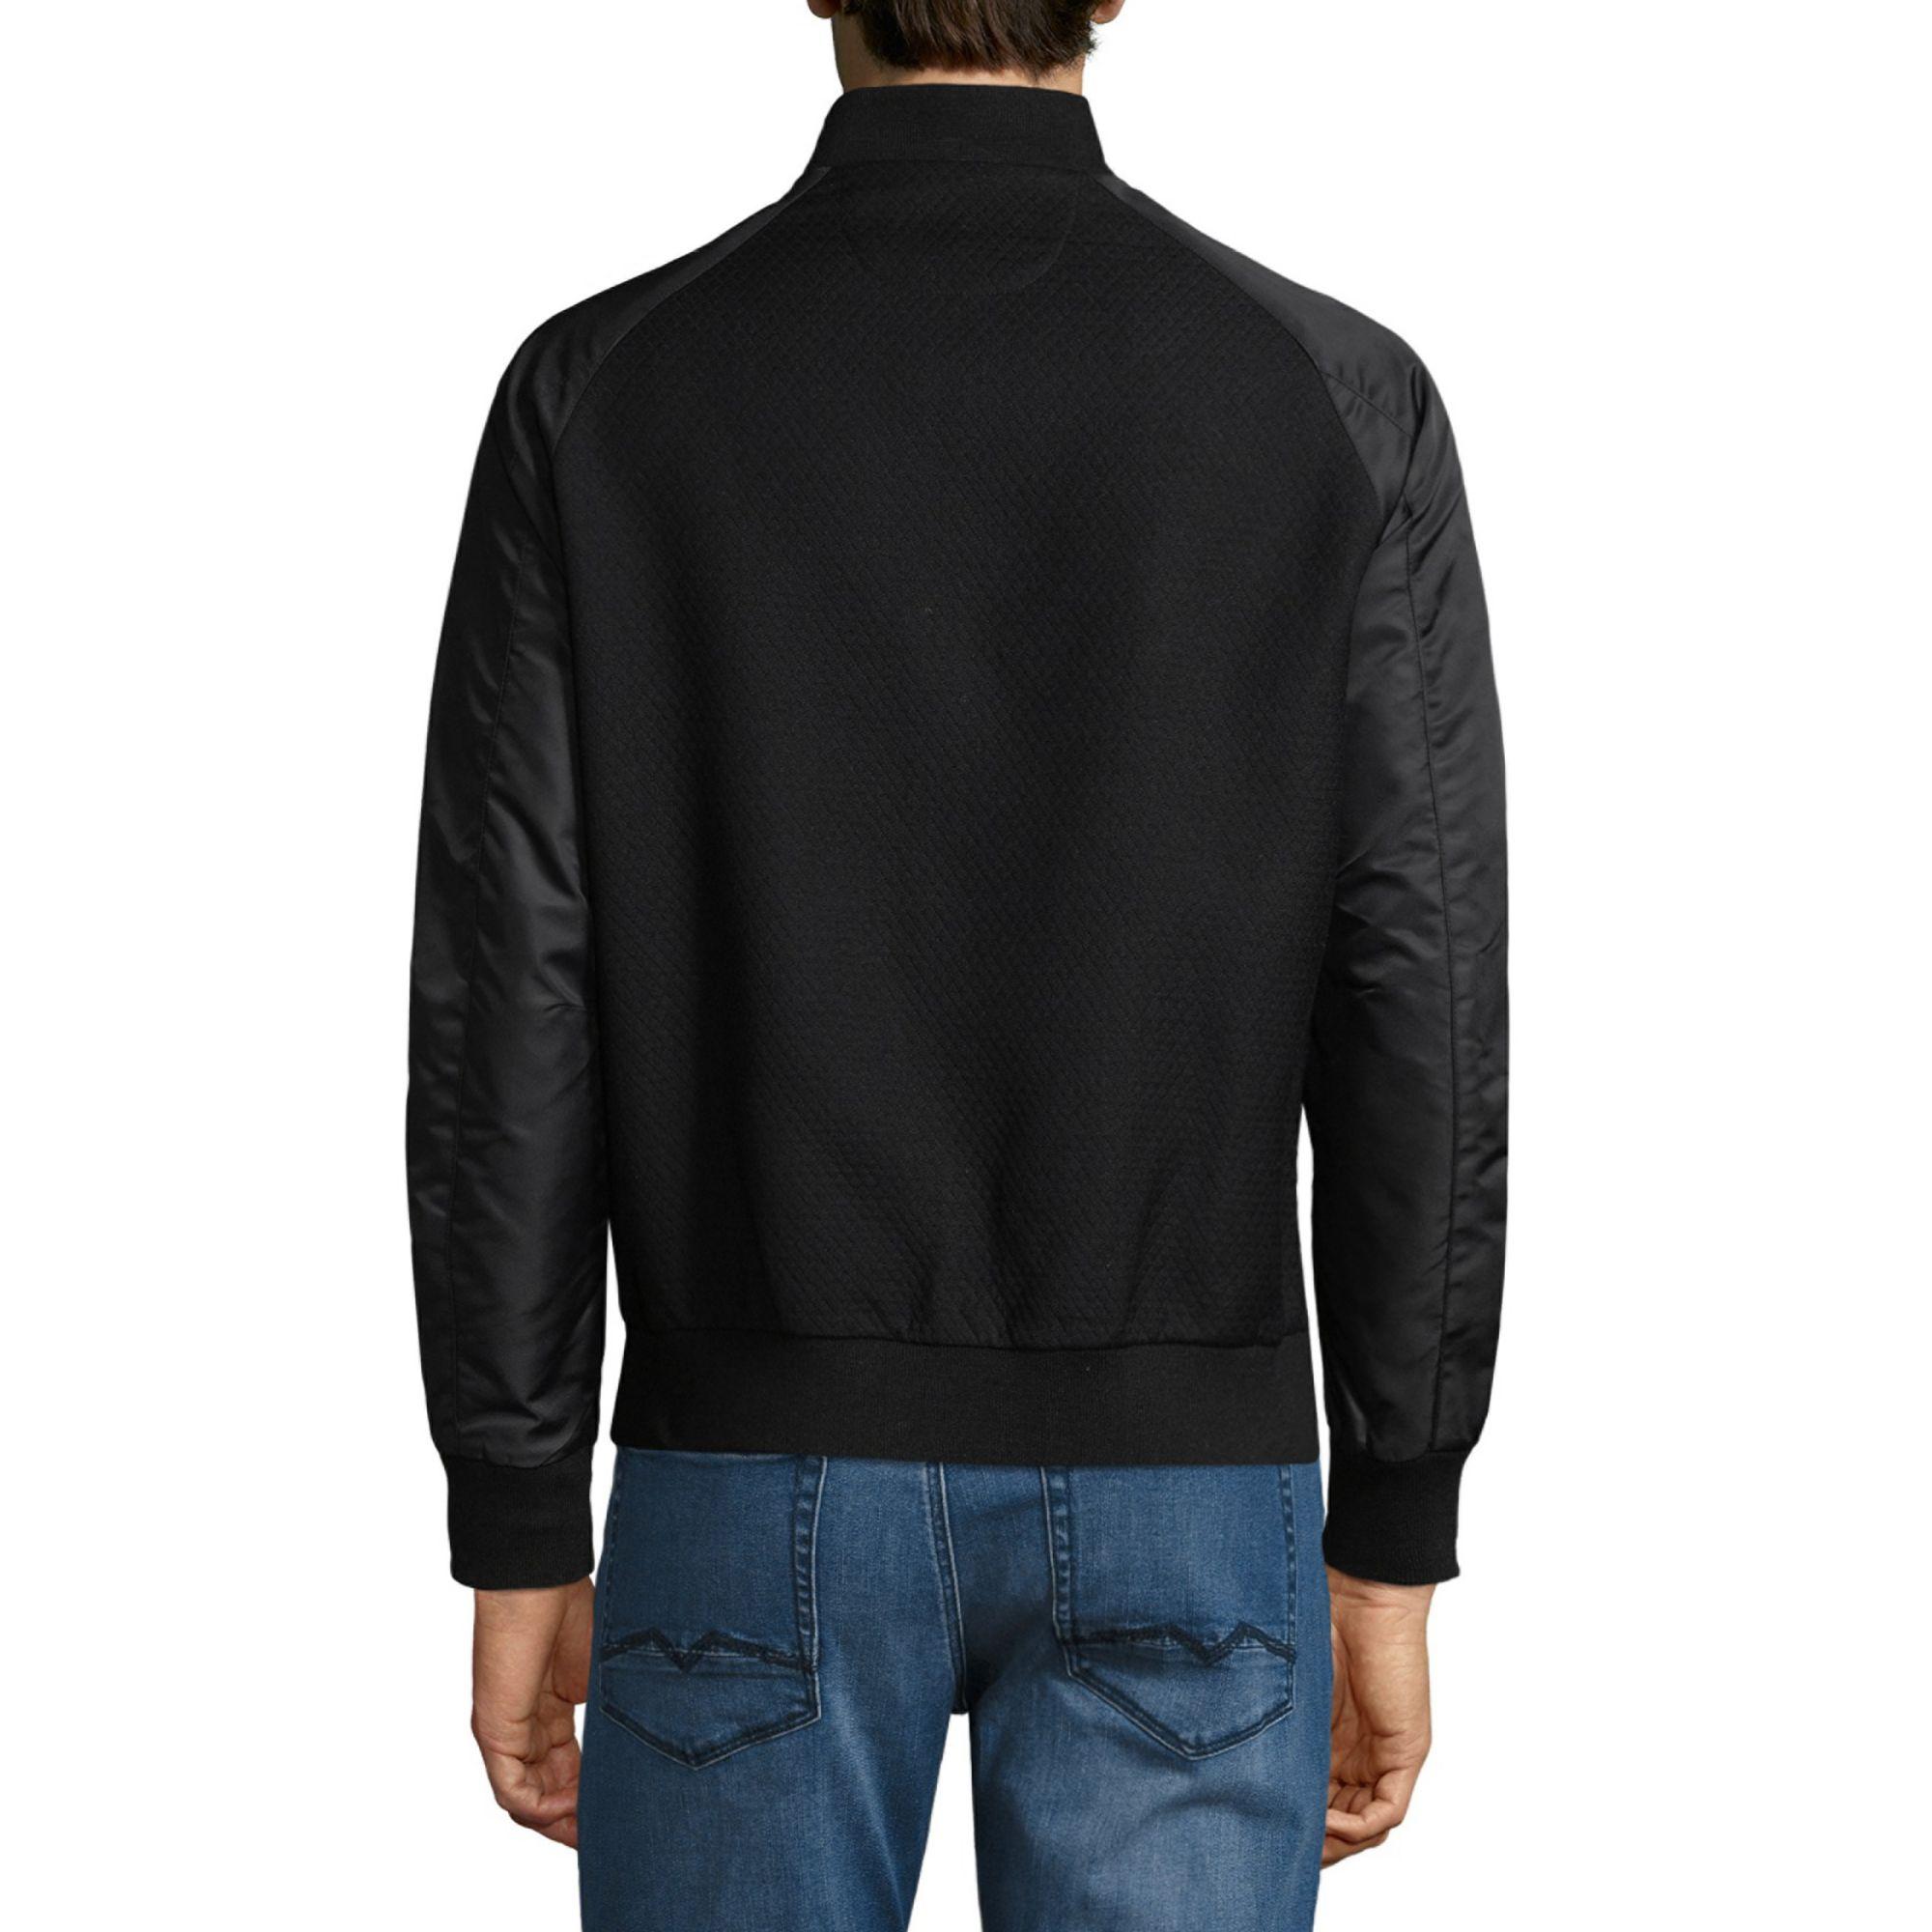 Karl Lagerfeld Wool Full-zip Textured Jacket in Black for Men - Lyst